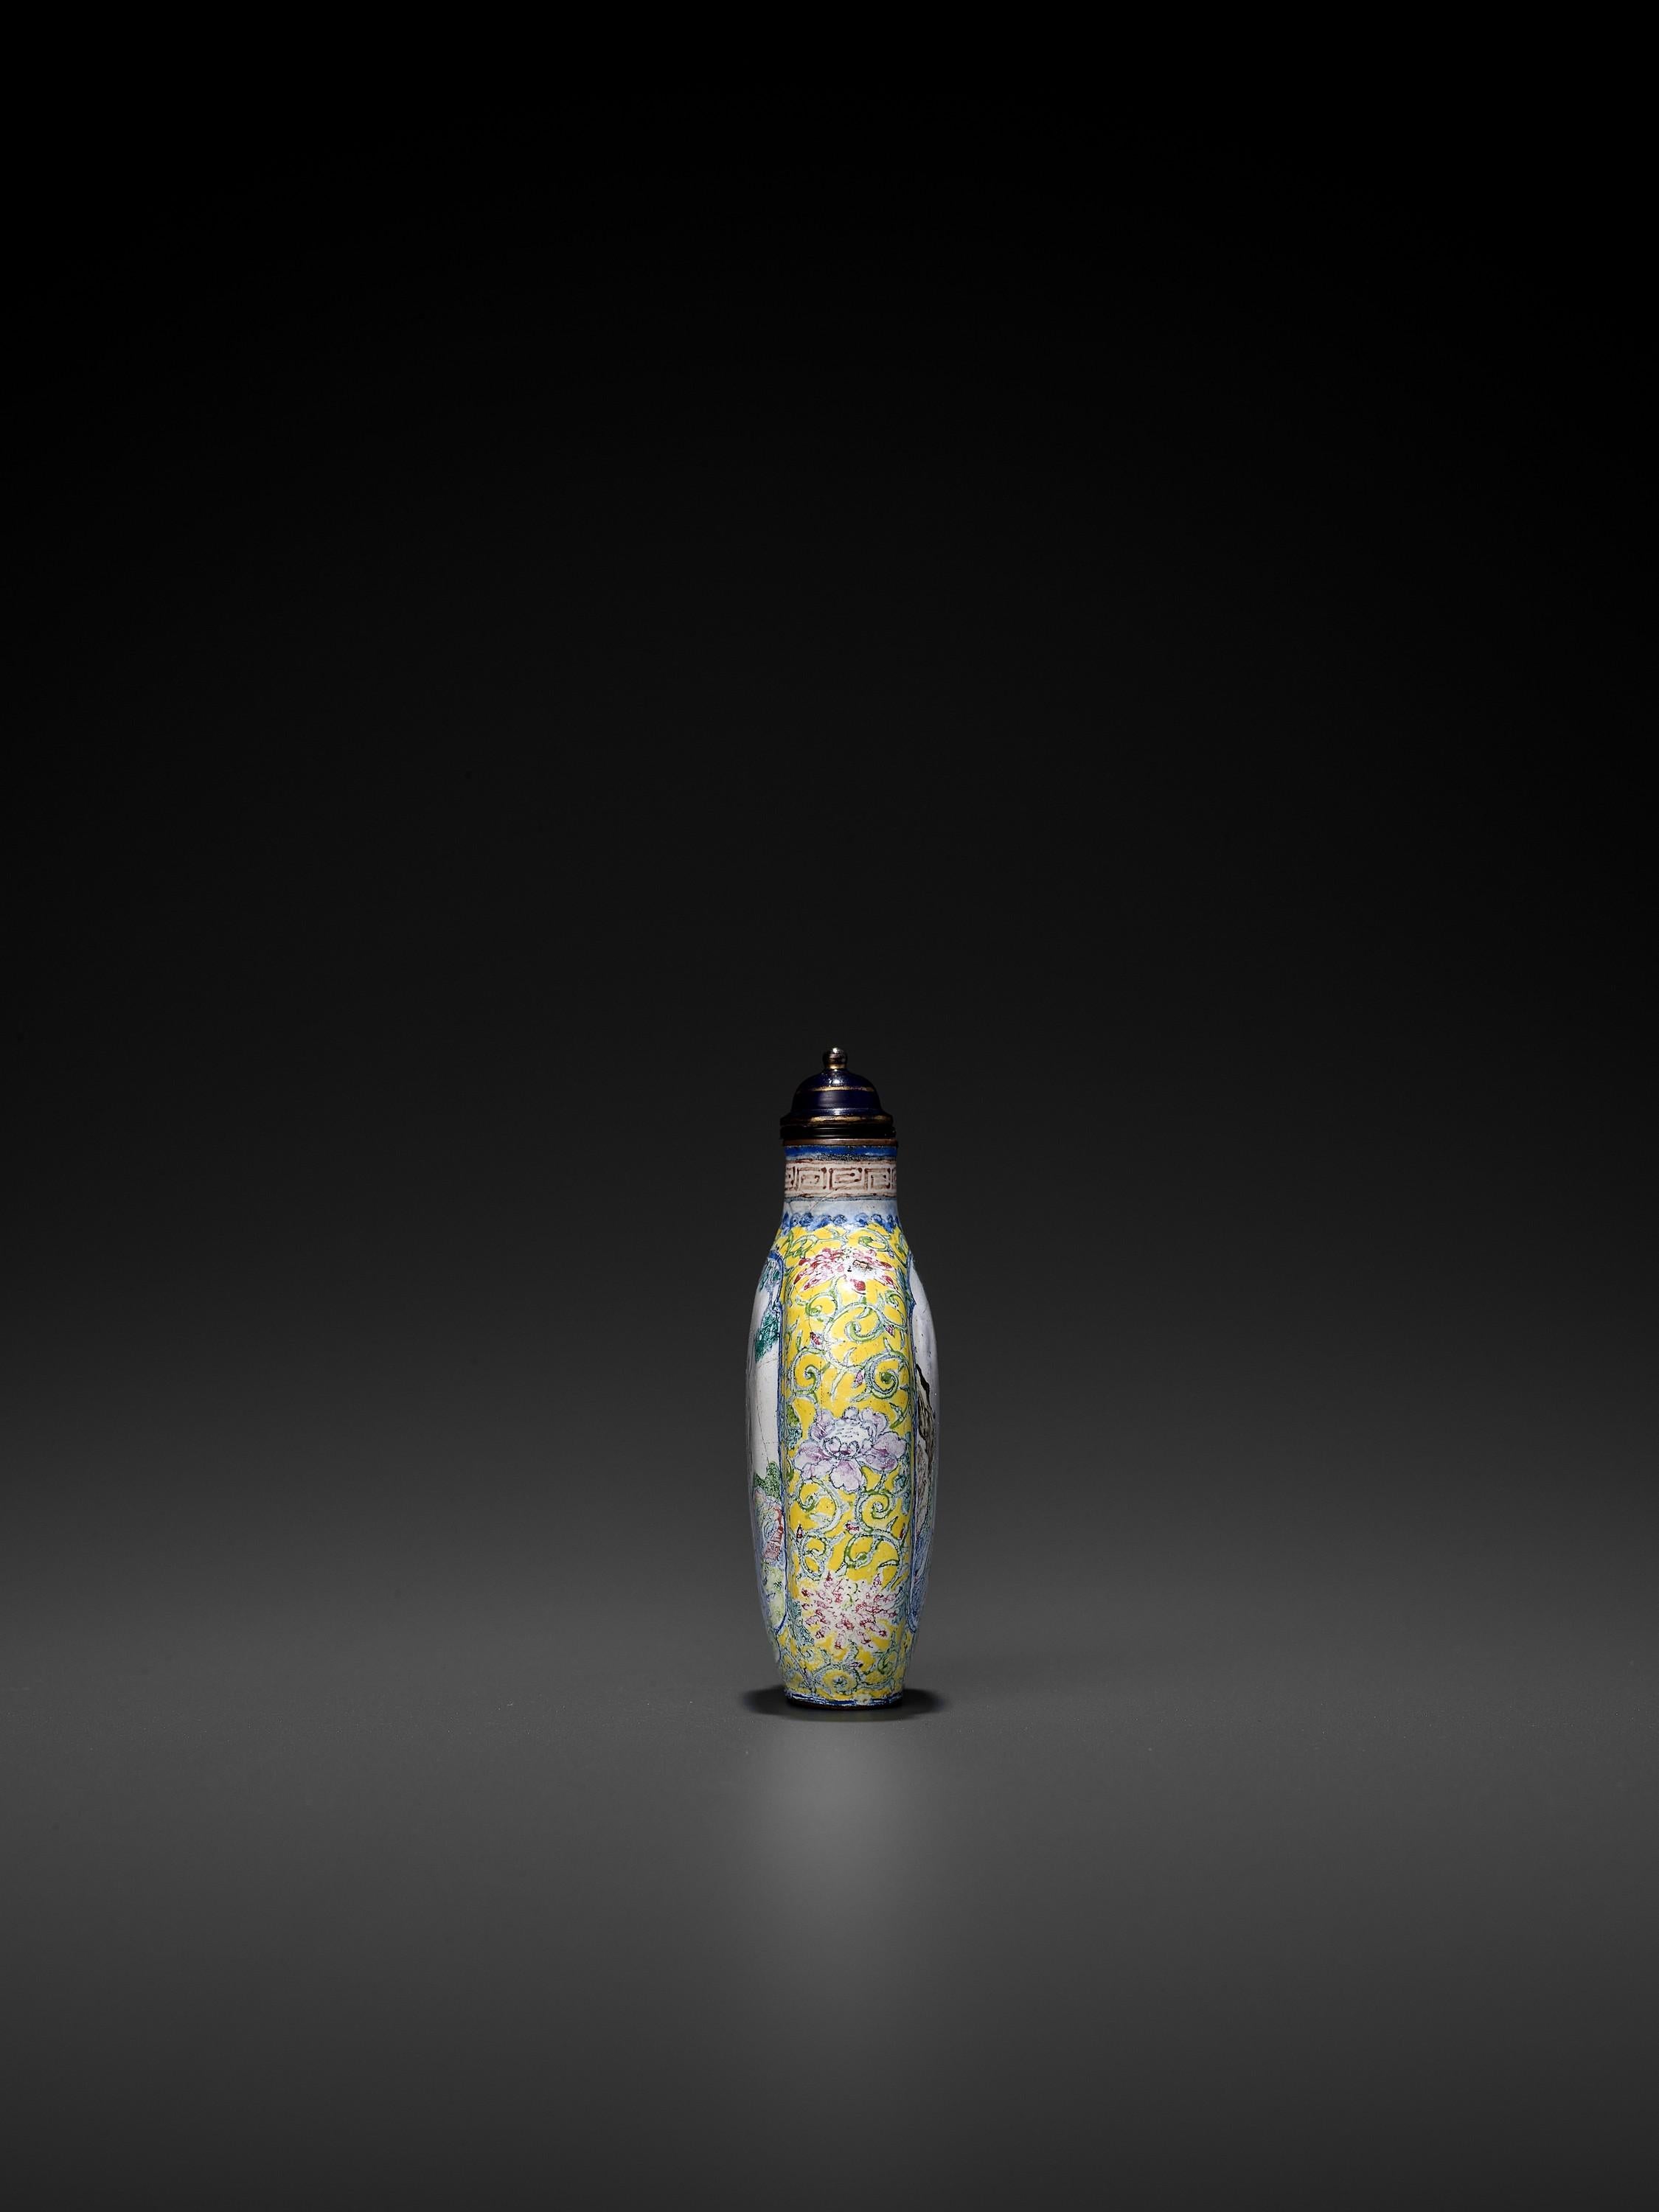 19th Century Canton Enamel Snuff Bottle, China, Qing Dynasty, 1644-1912